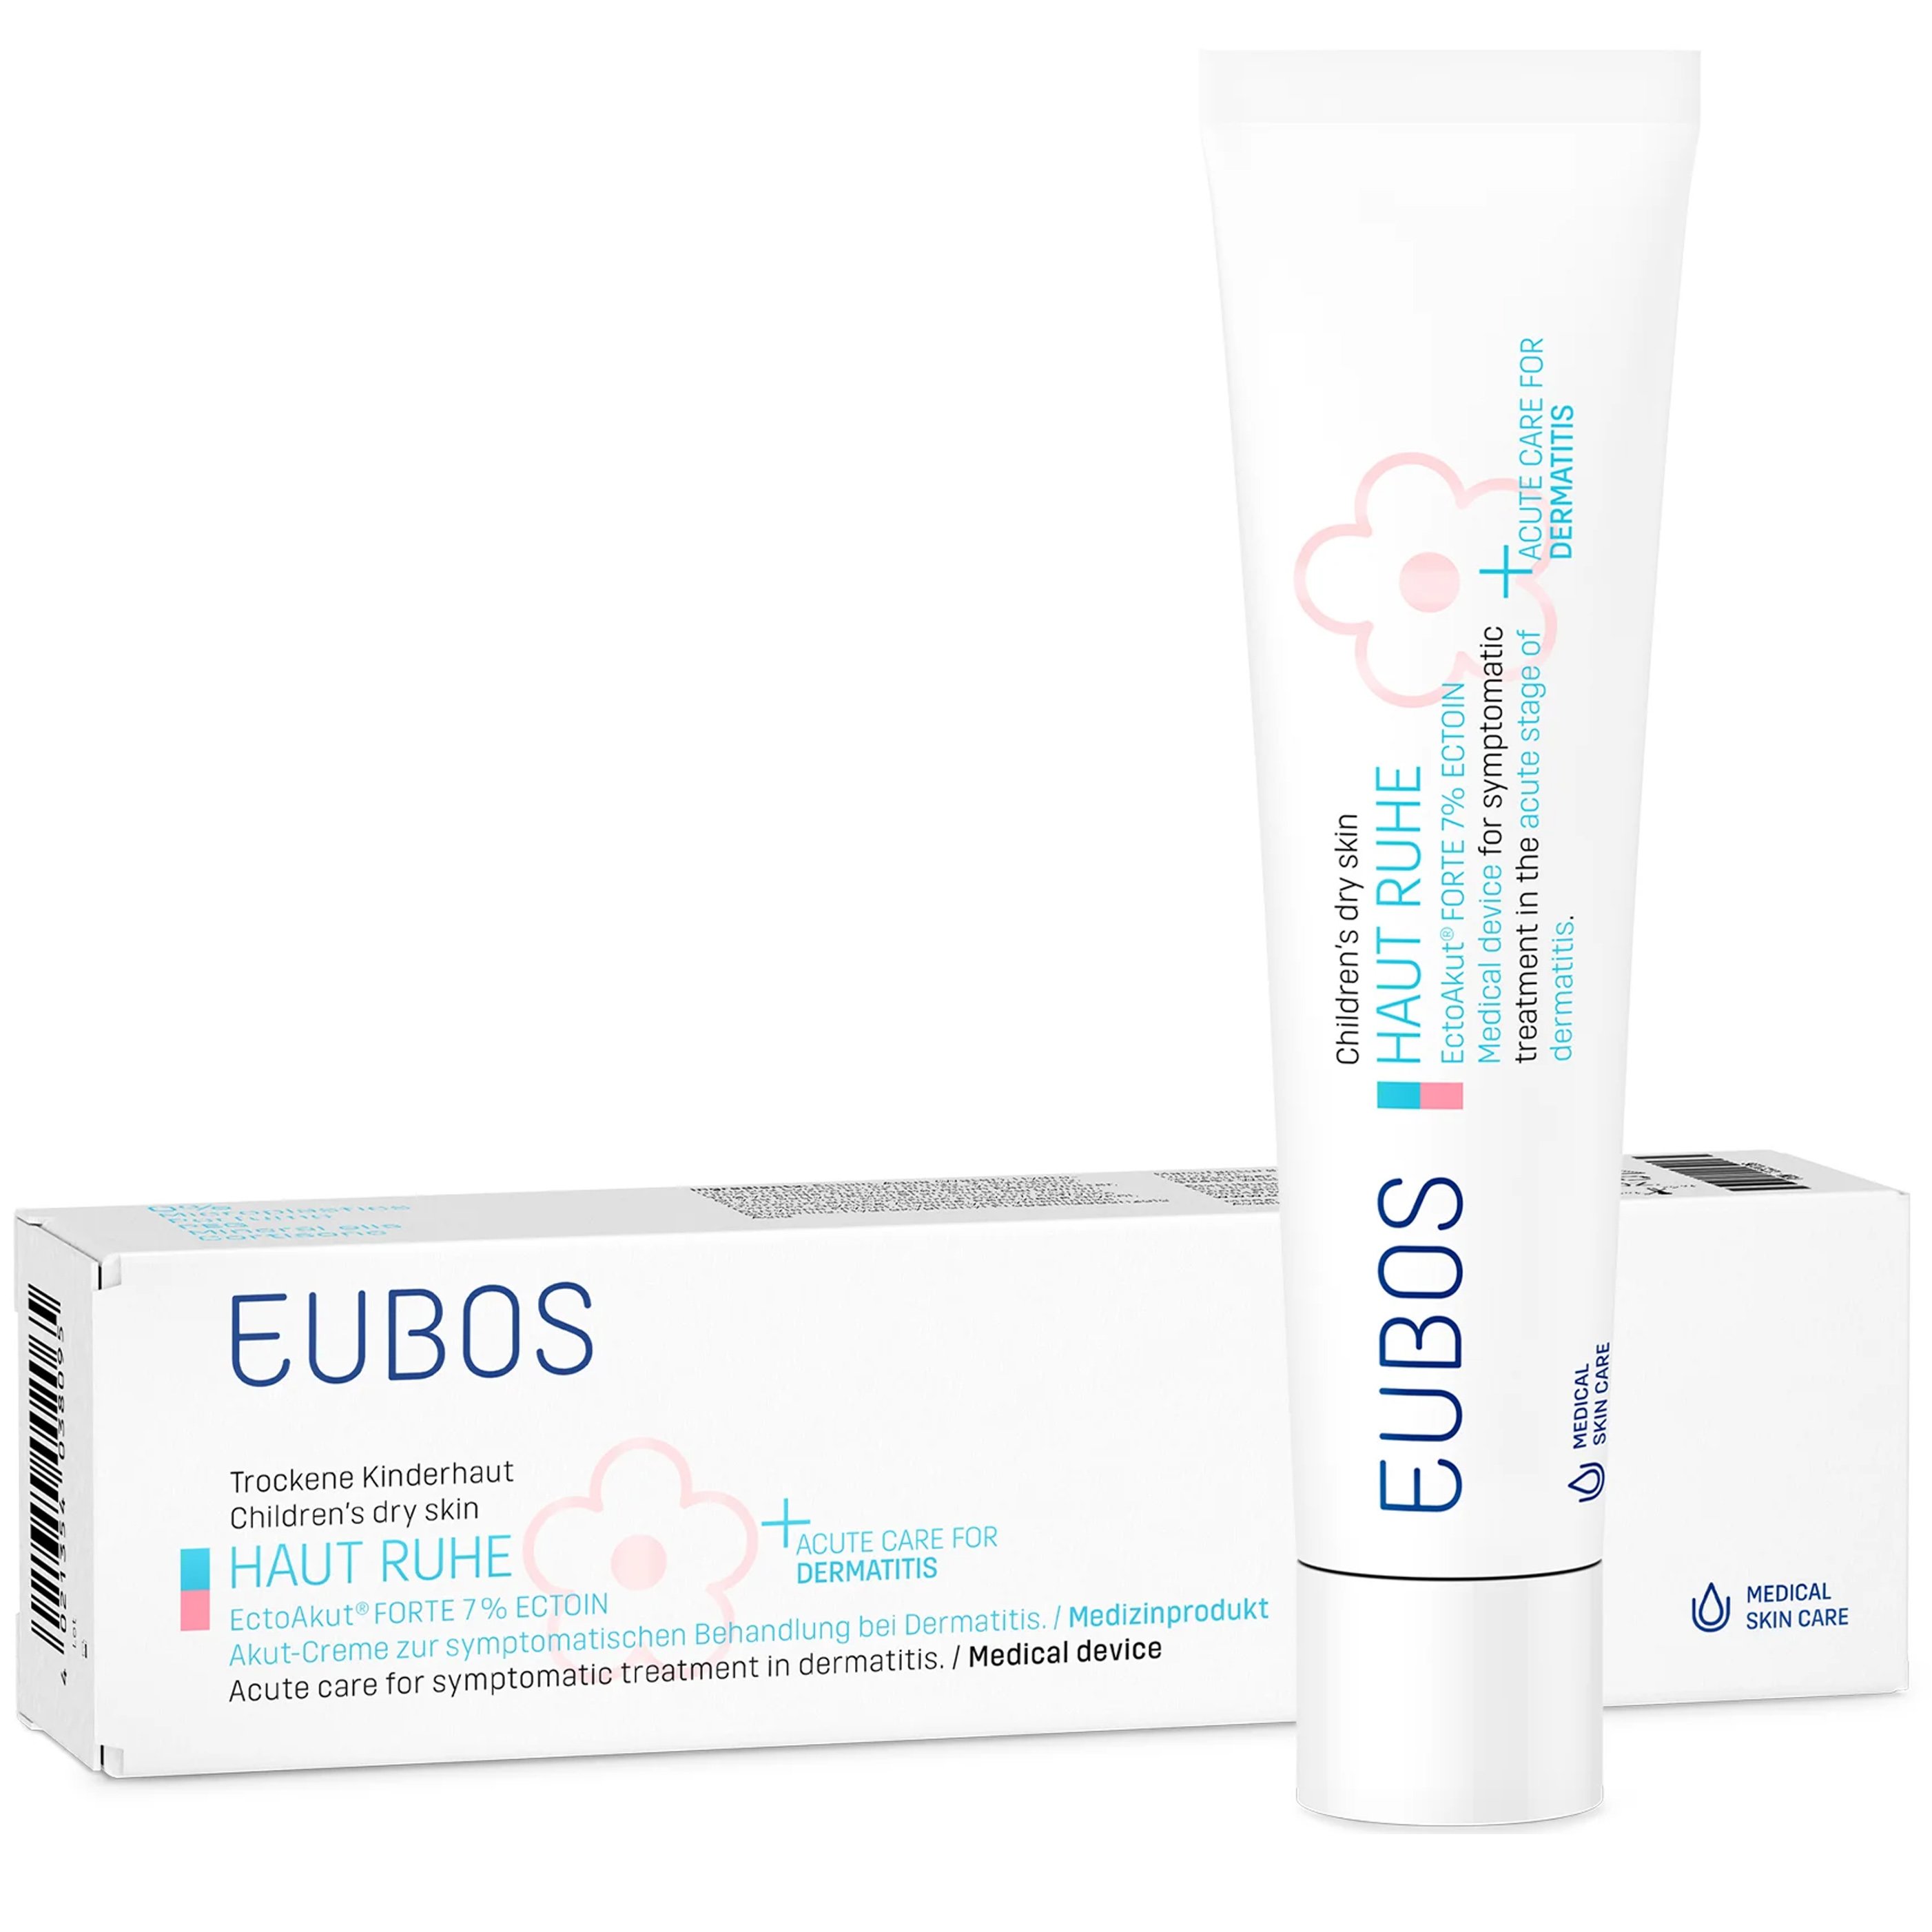 Eubos Haut Ruhe EctoAkut Forte Ectoin 7% Children’s Dry Skin Cream Κρέμα Αντιμετώπισης Ατοπικής Δερματίτιδας για Παιδιά 30ml